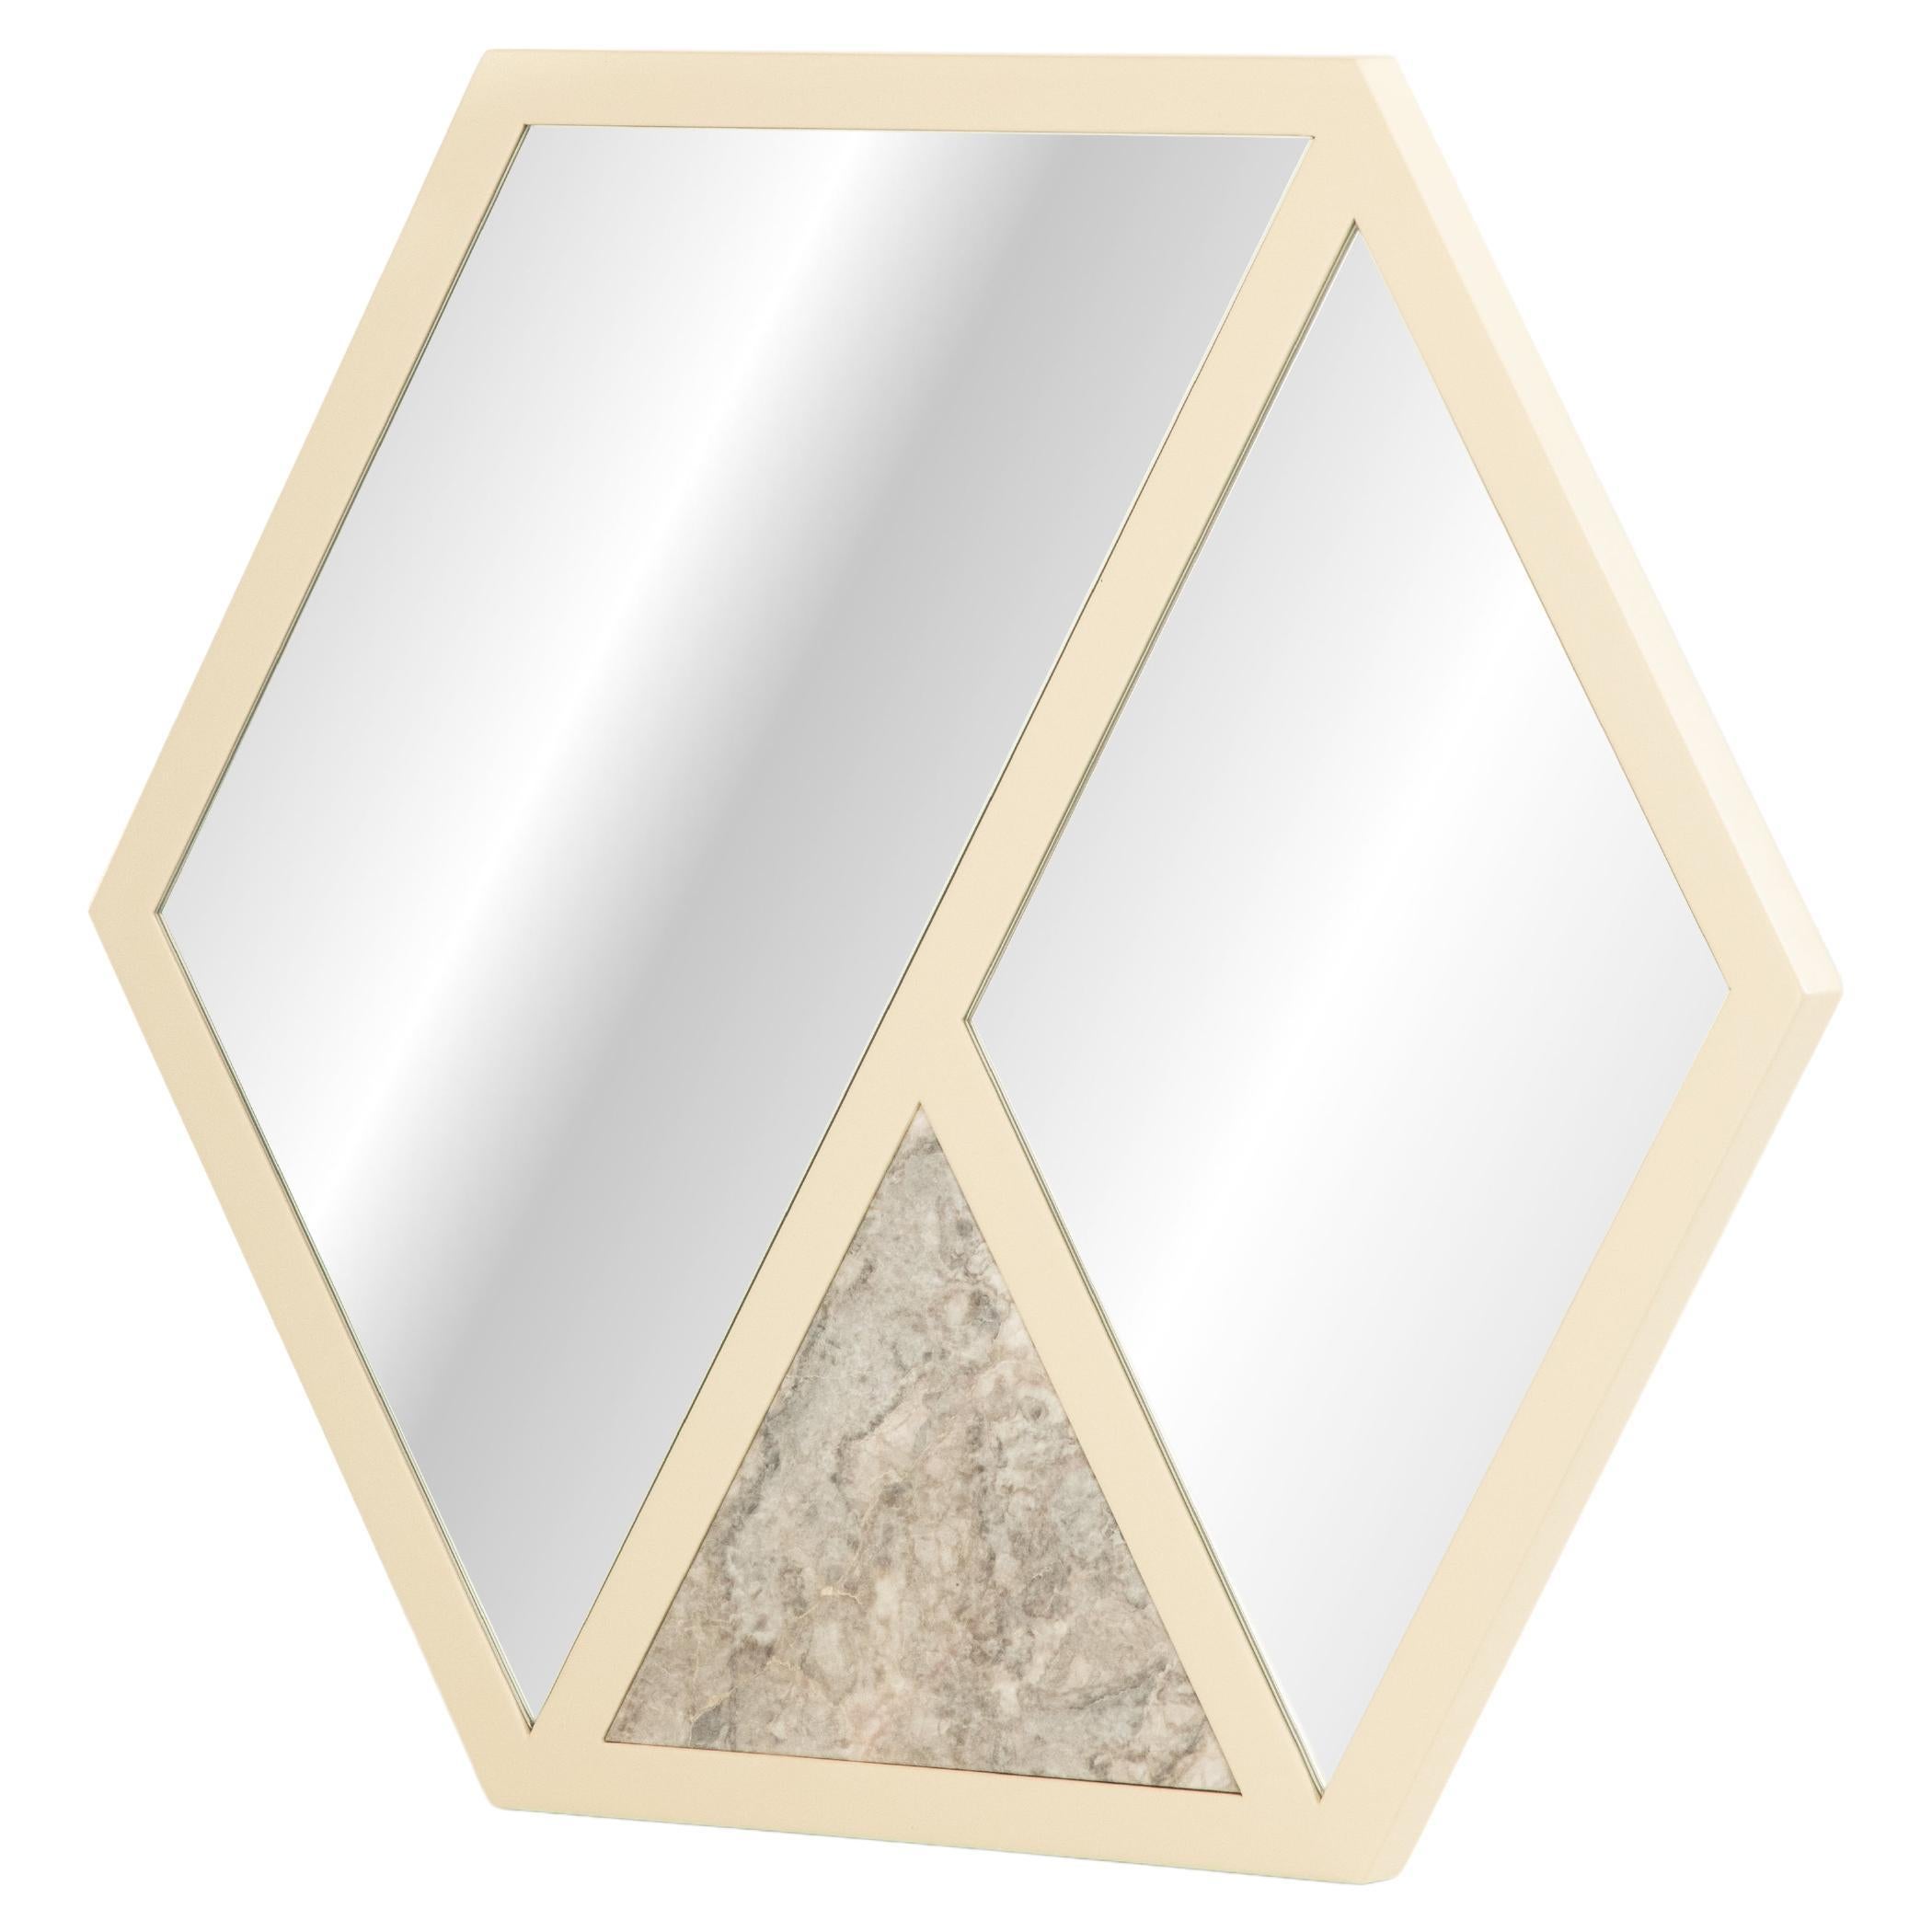 Hexagonal Marble Mirror, Handmade in Italy